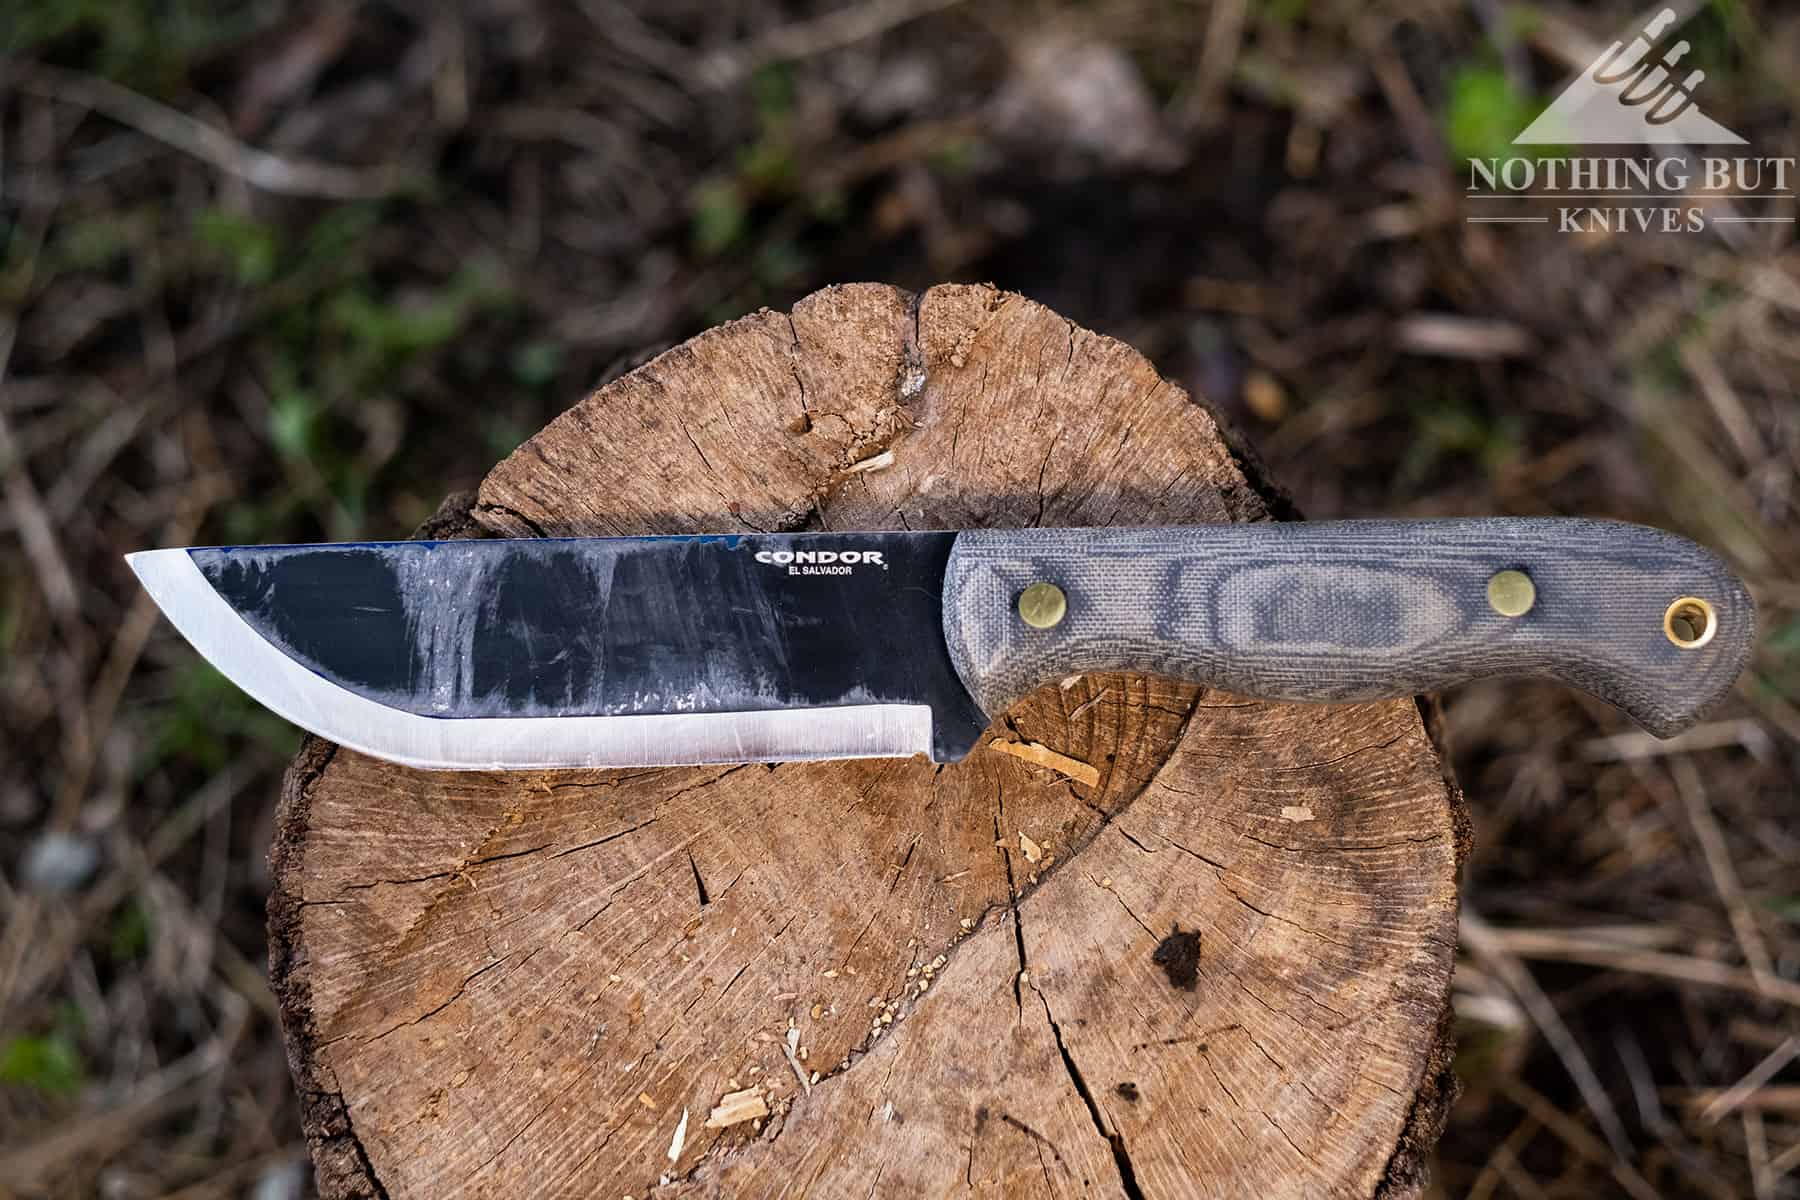 https://www.nothingbutknives.com/wp-content/uploads/2020/08/Condor-SBK-Survival-Knife-Review.jpg